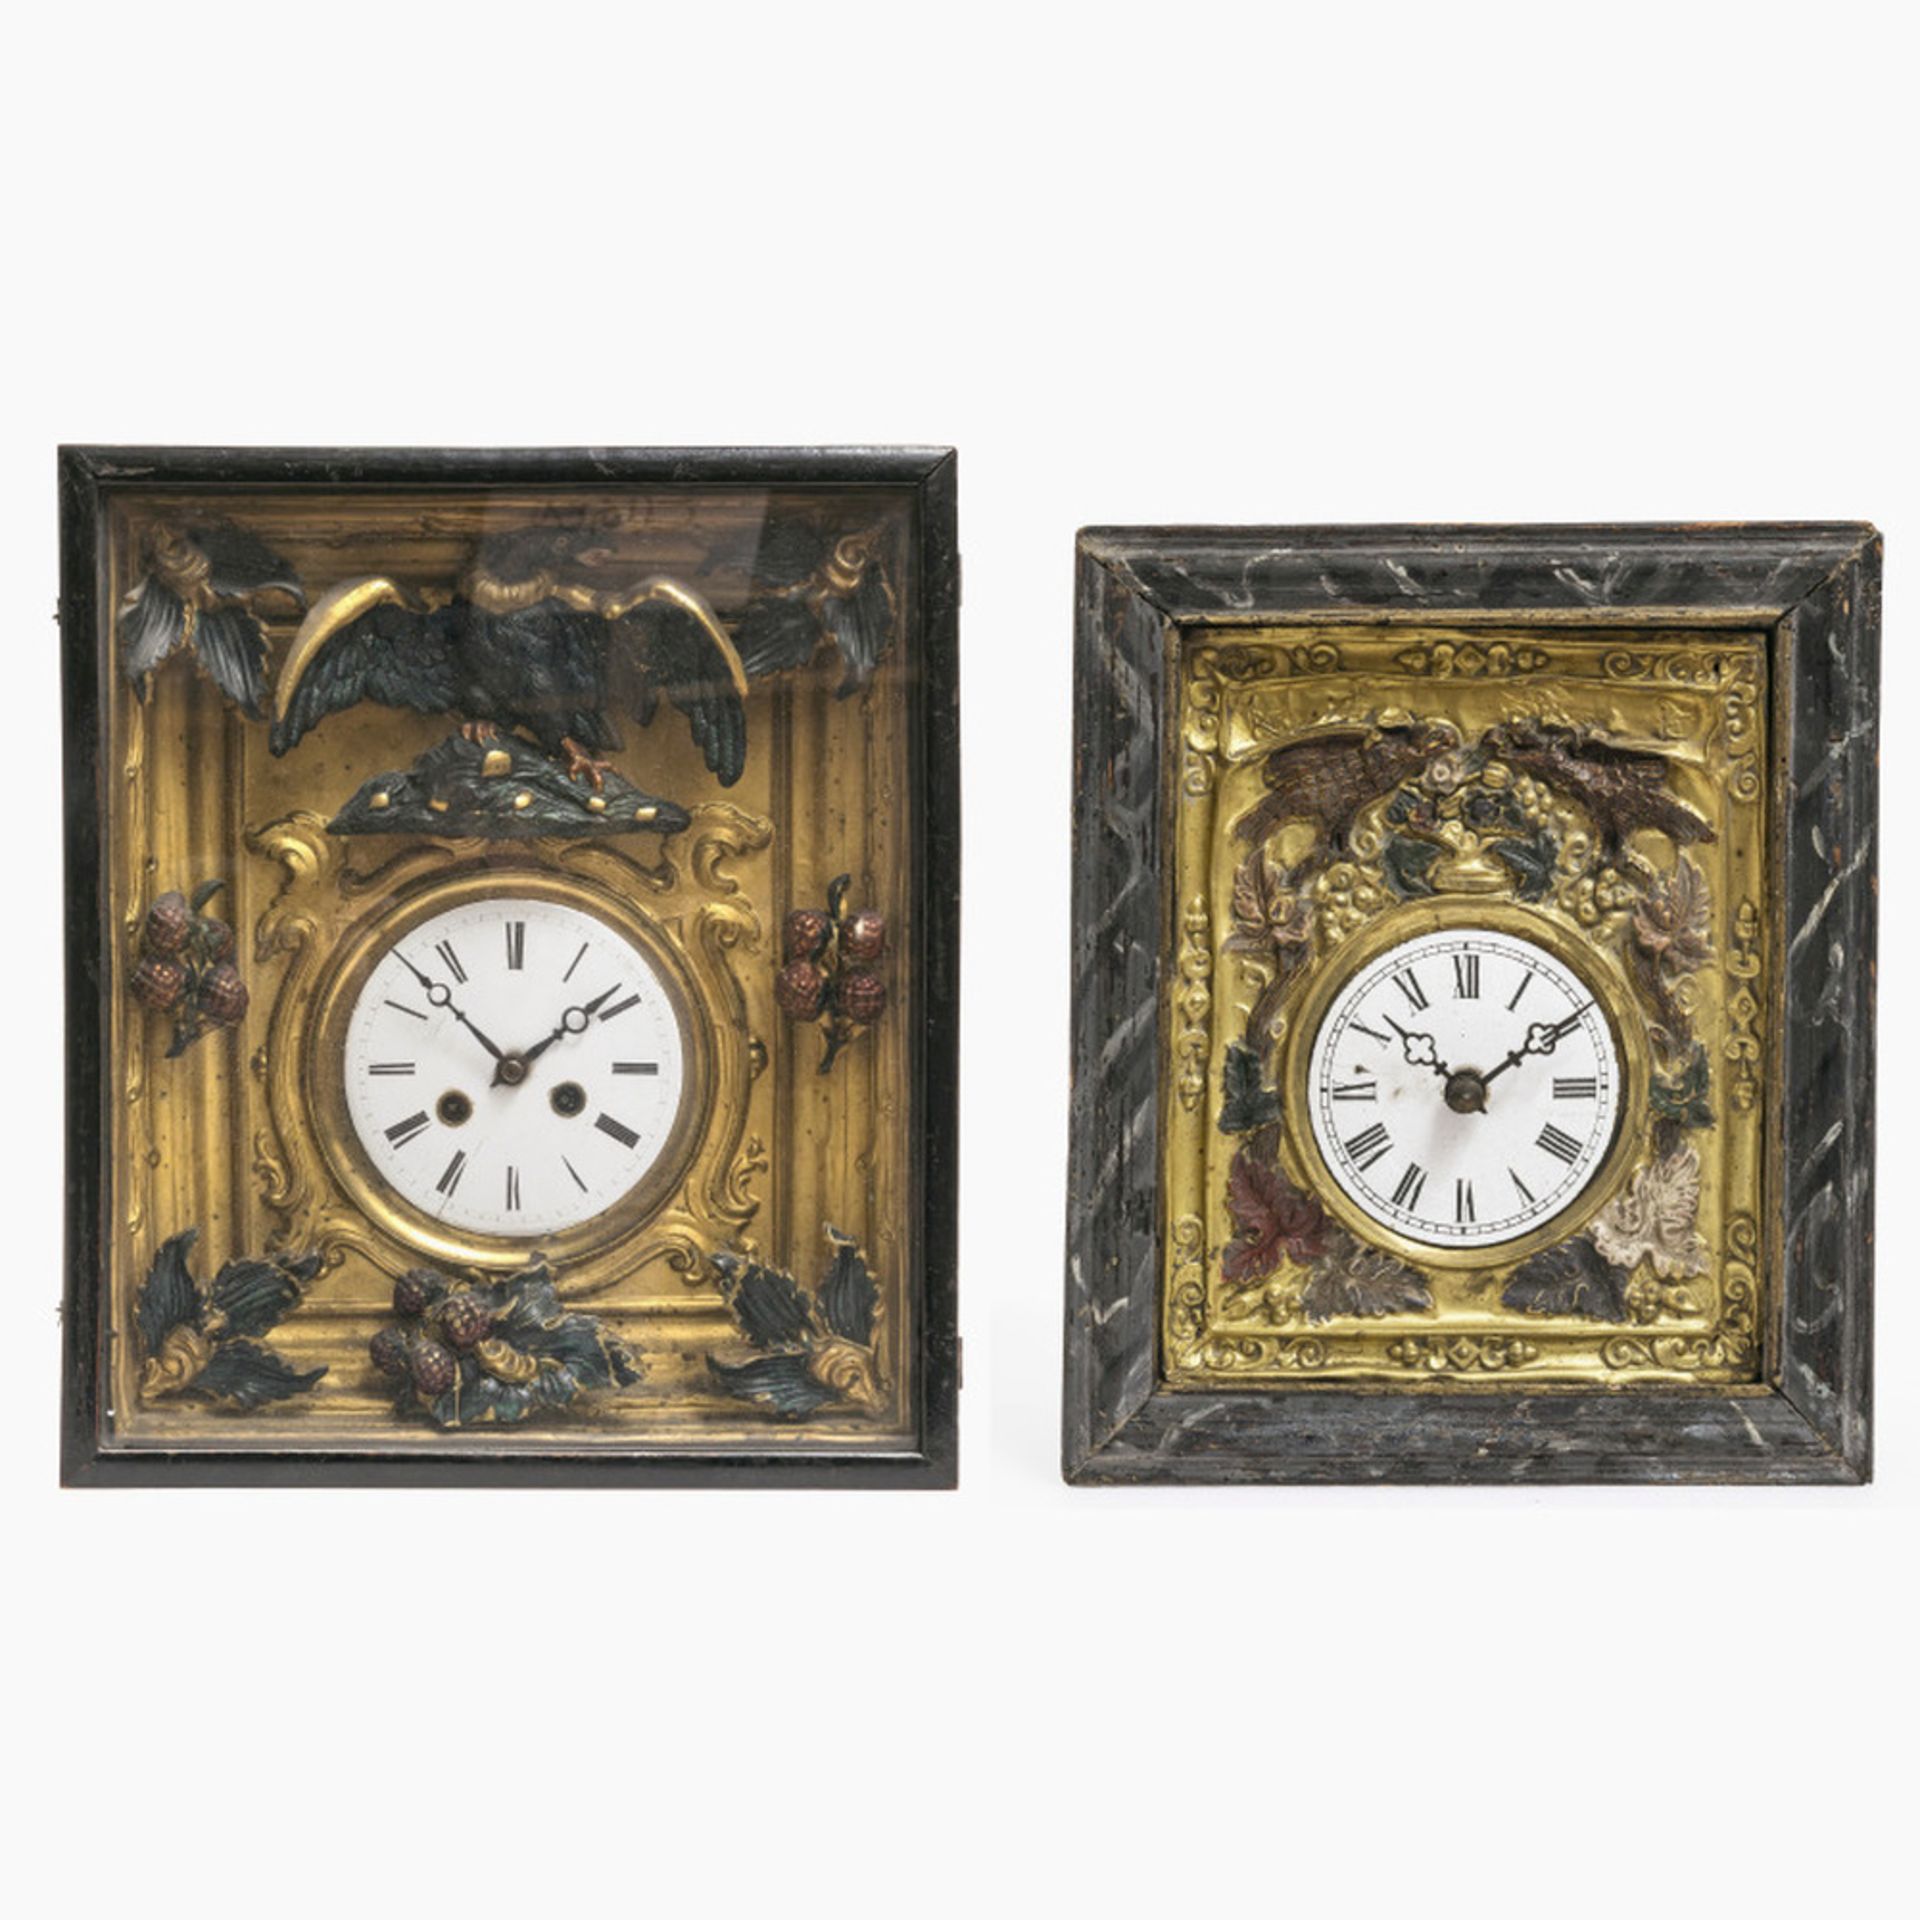 Two frame clocks - Image 2 of 2